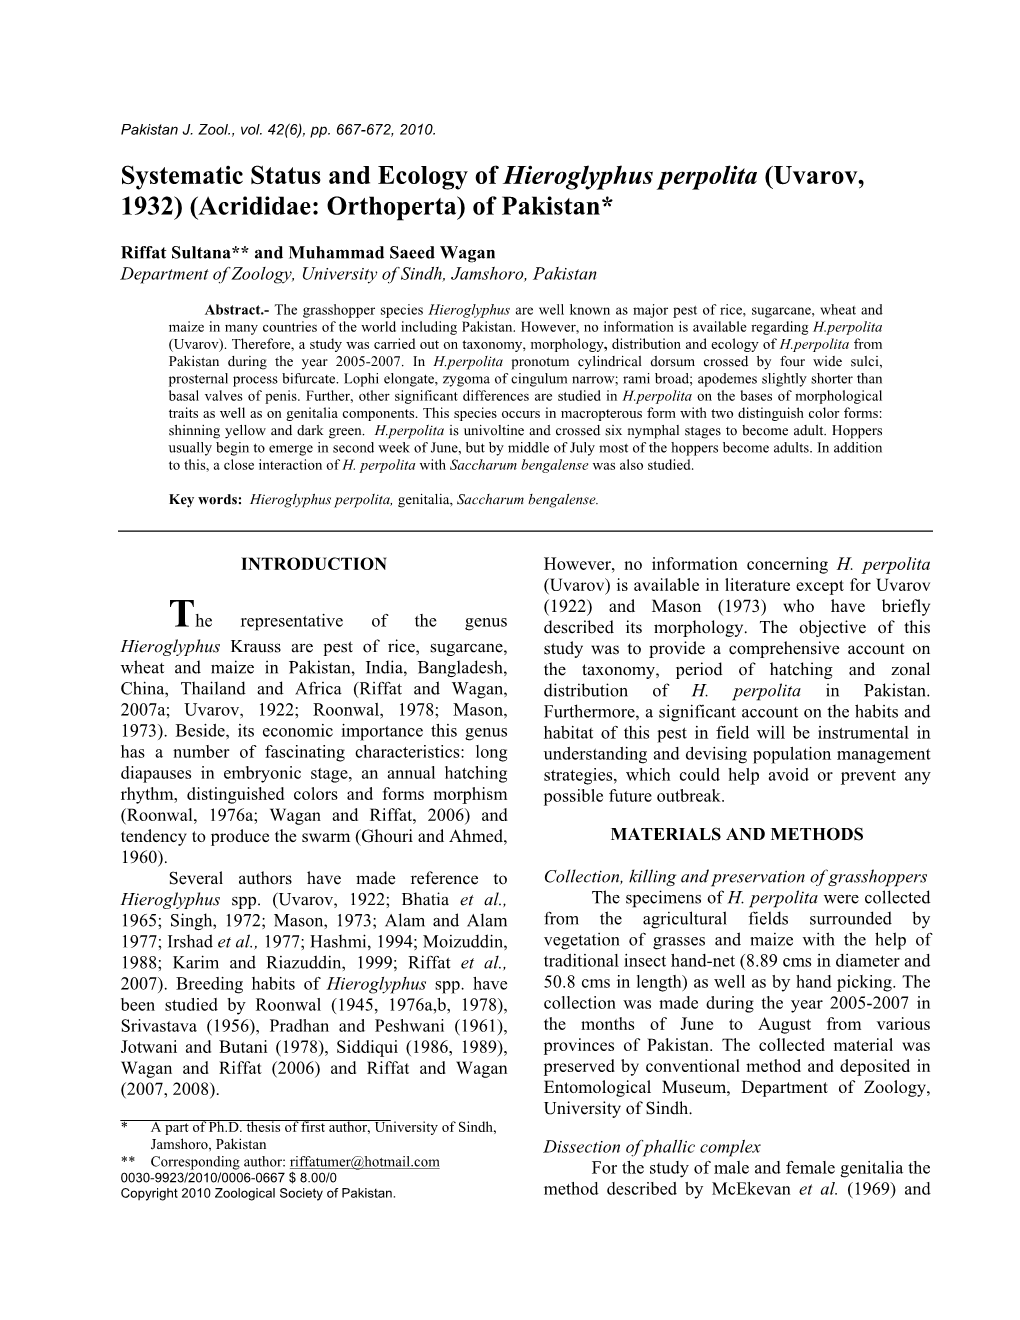 Systematic Status and Ecology of Hieroglyphus Perpolita (Uvarov, 1932) (Acrididae: Orthoperta) of Pakistan*